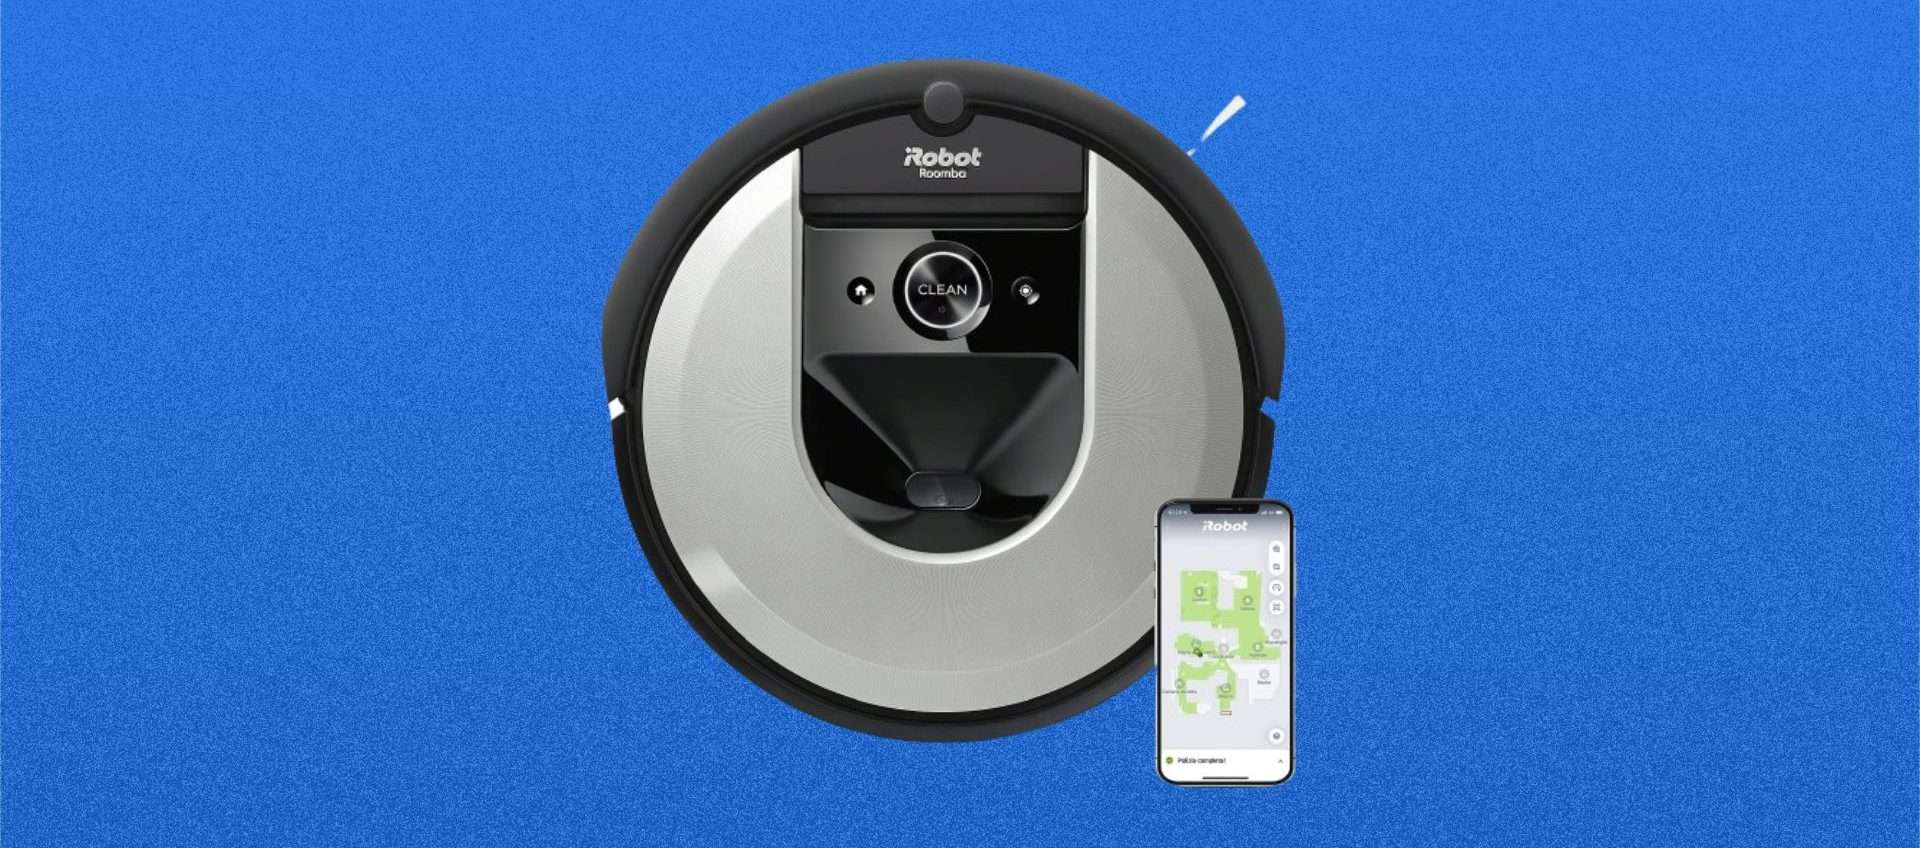 iRobot Roomba, offerta imperdibile su Amazon: casa pulita senza sforzi